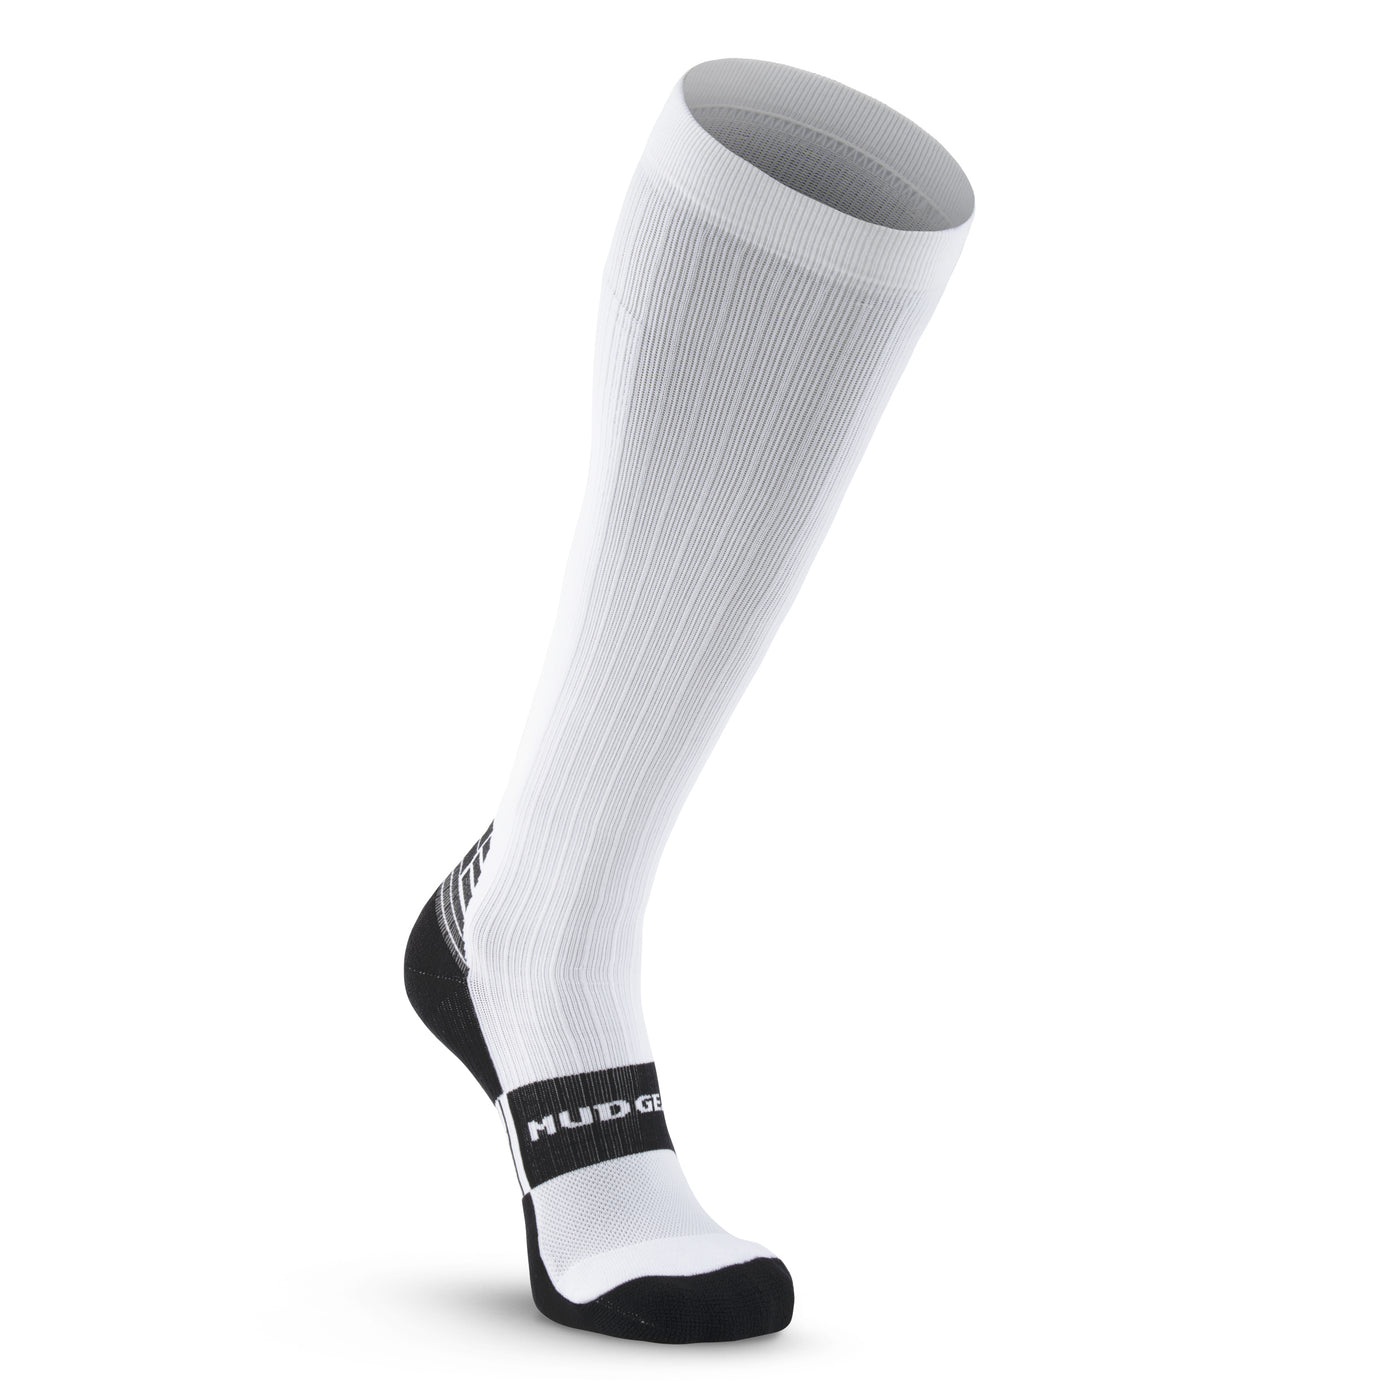 Mudgear tall compression socks white for men